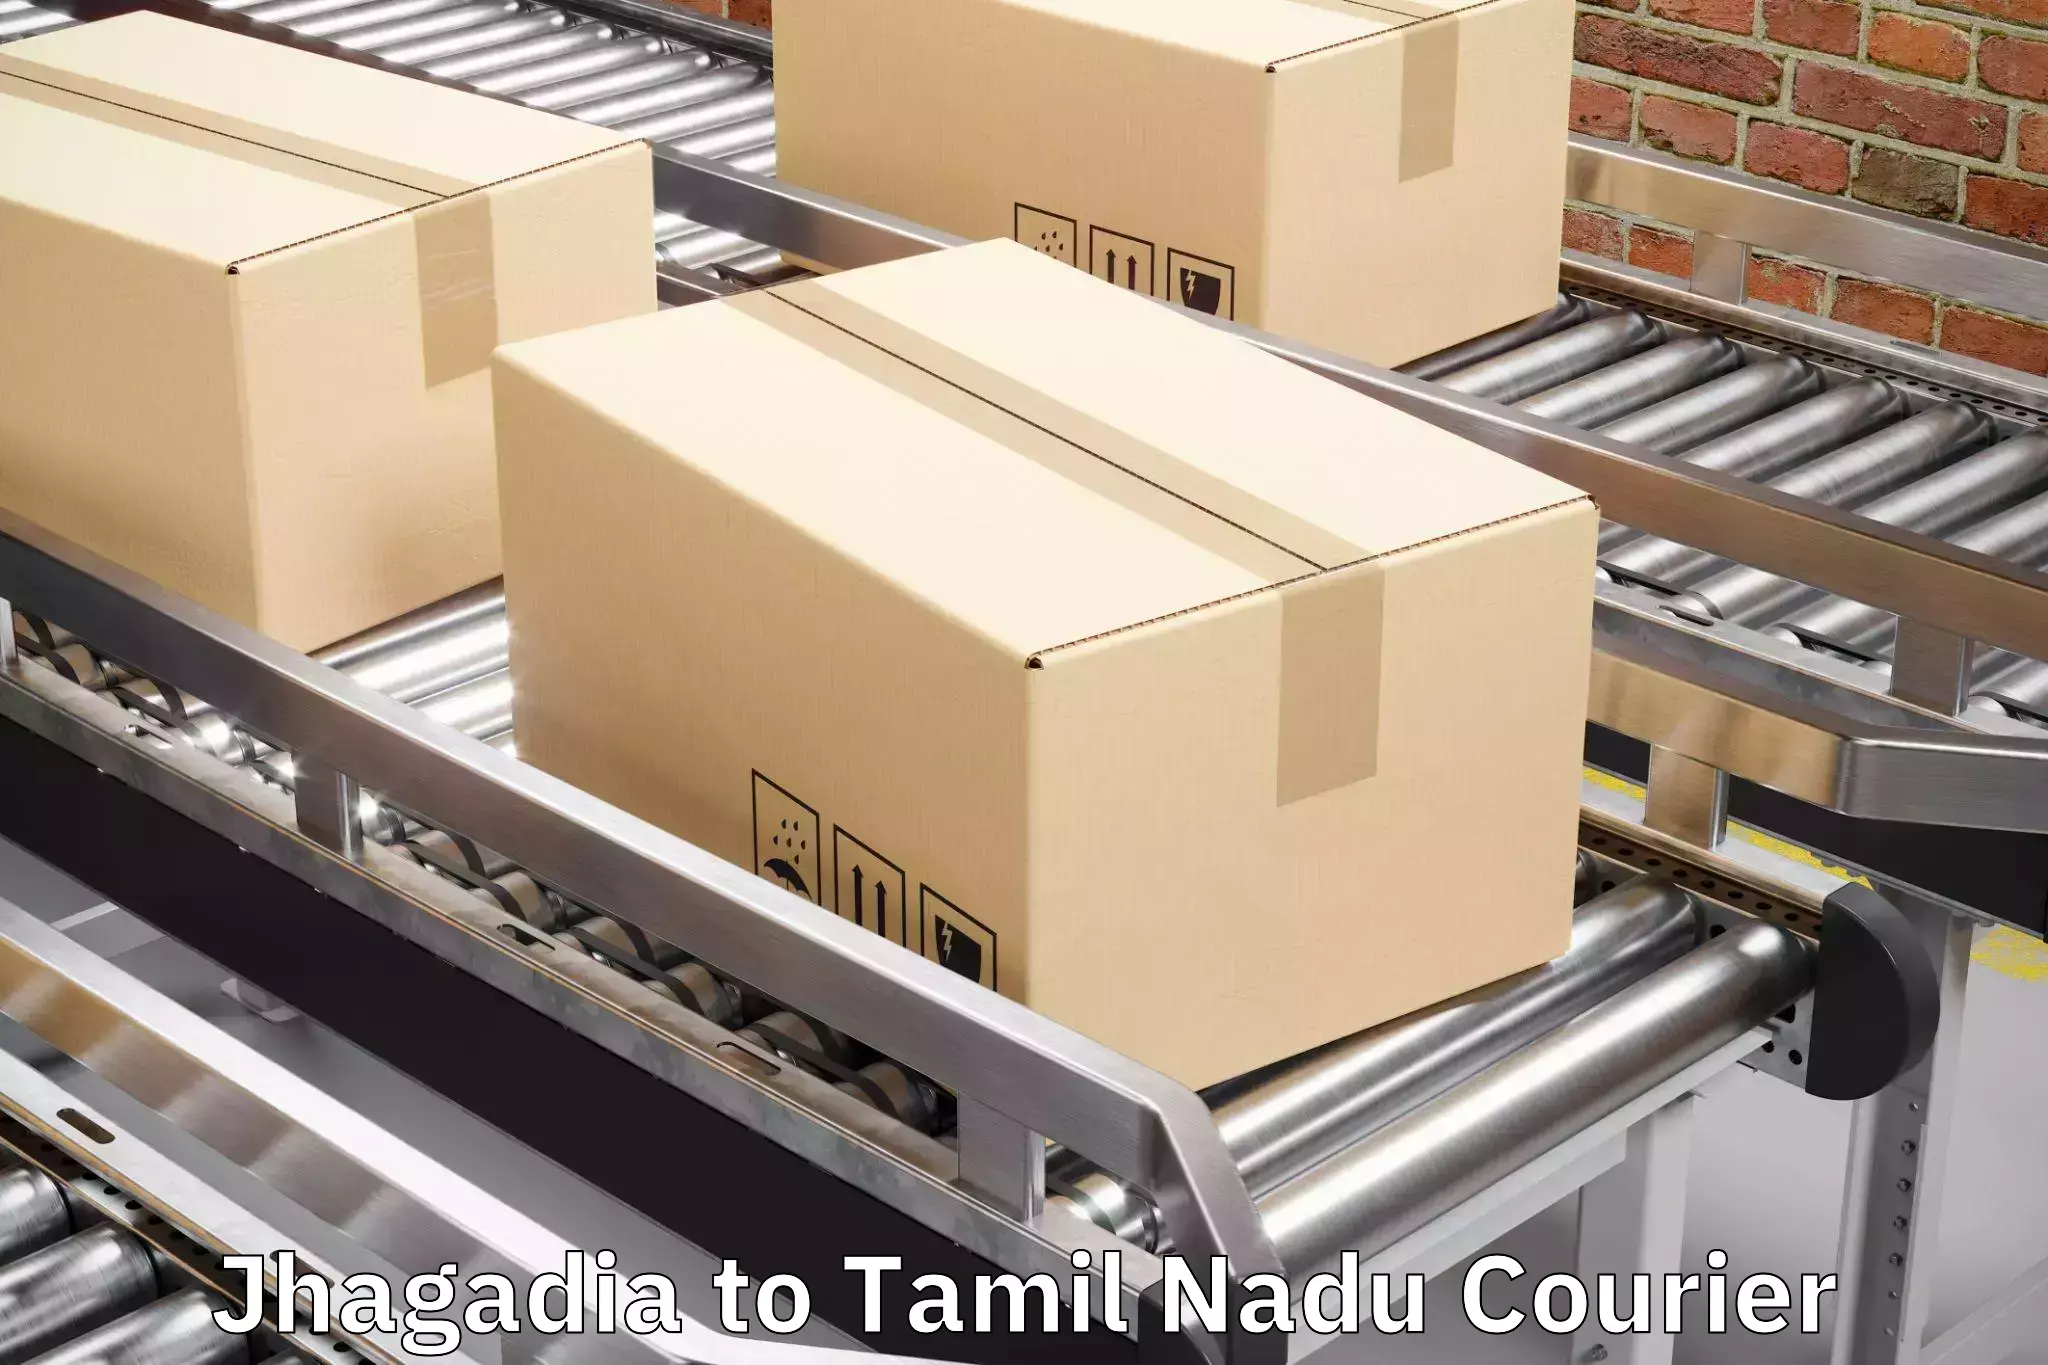 Hassle-free luggage shipping Jhagadia to Ennore Port Chennai